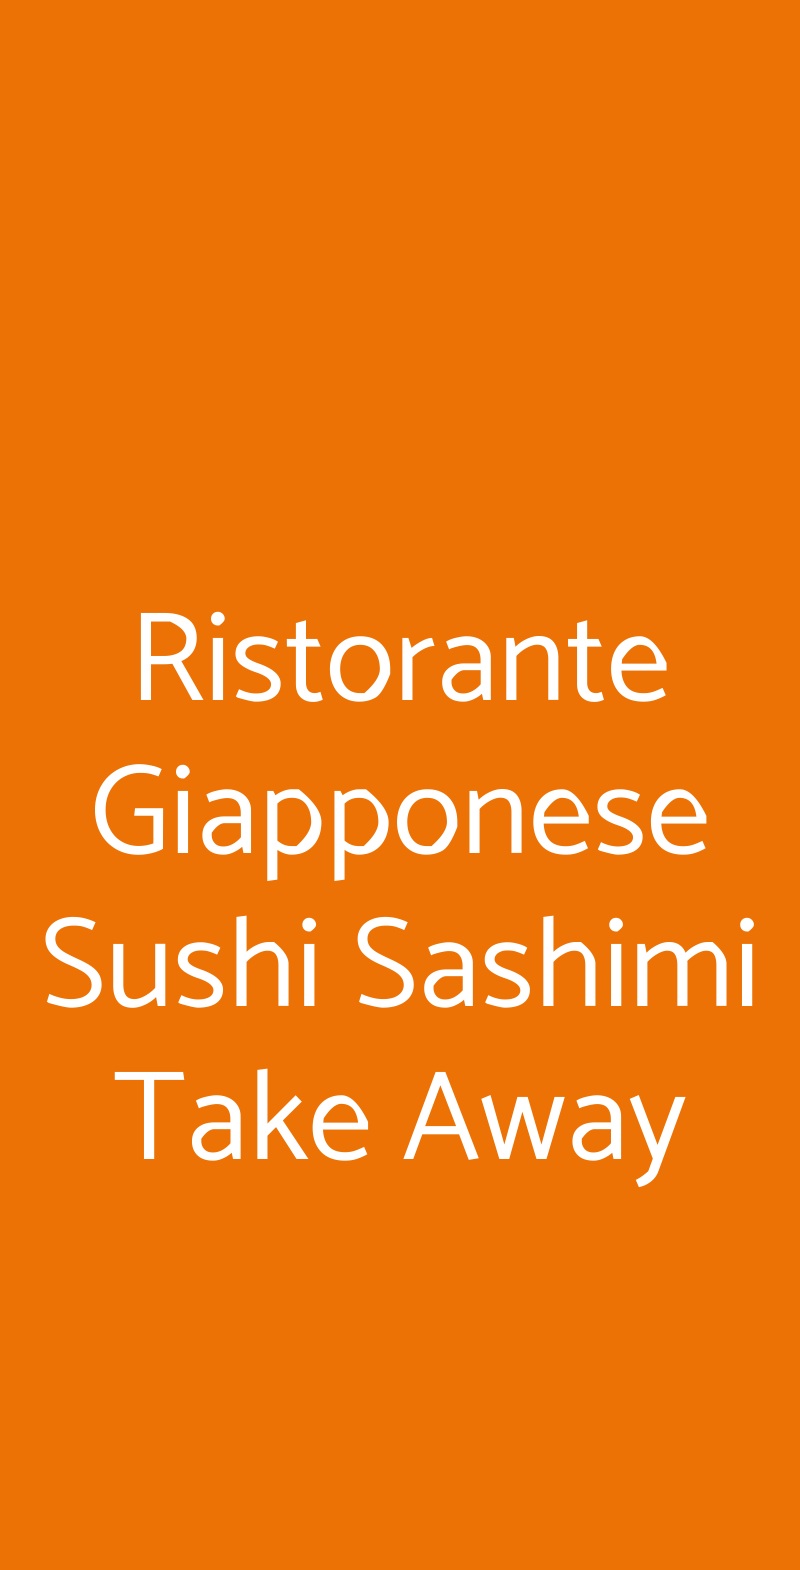 Ristorante Giapponese Sushi Sashimi Take Away Milano menù 1 pagina